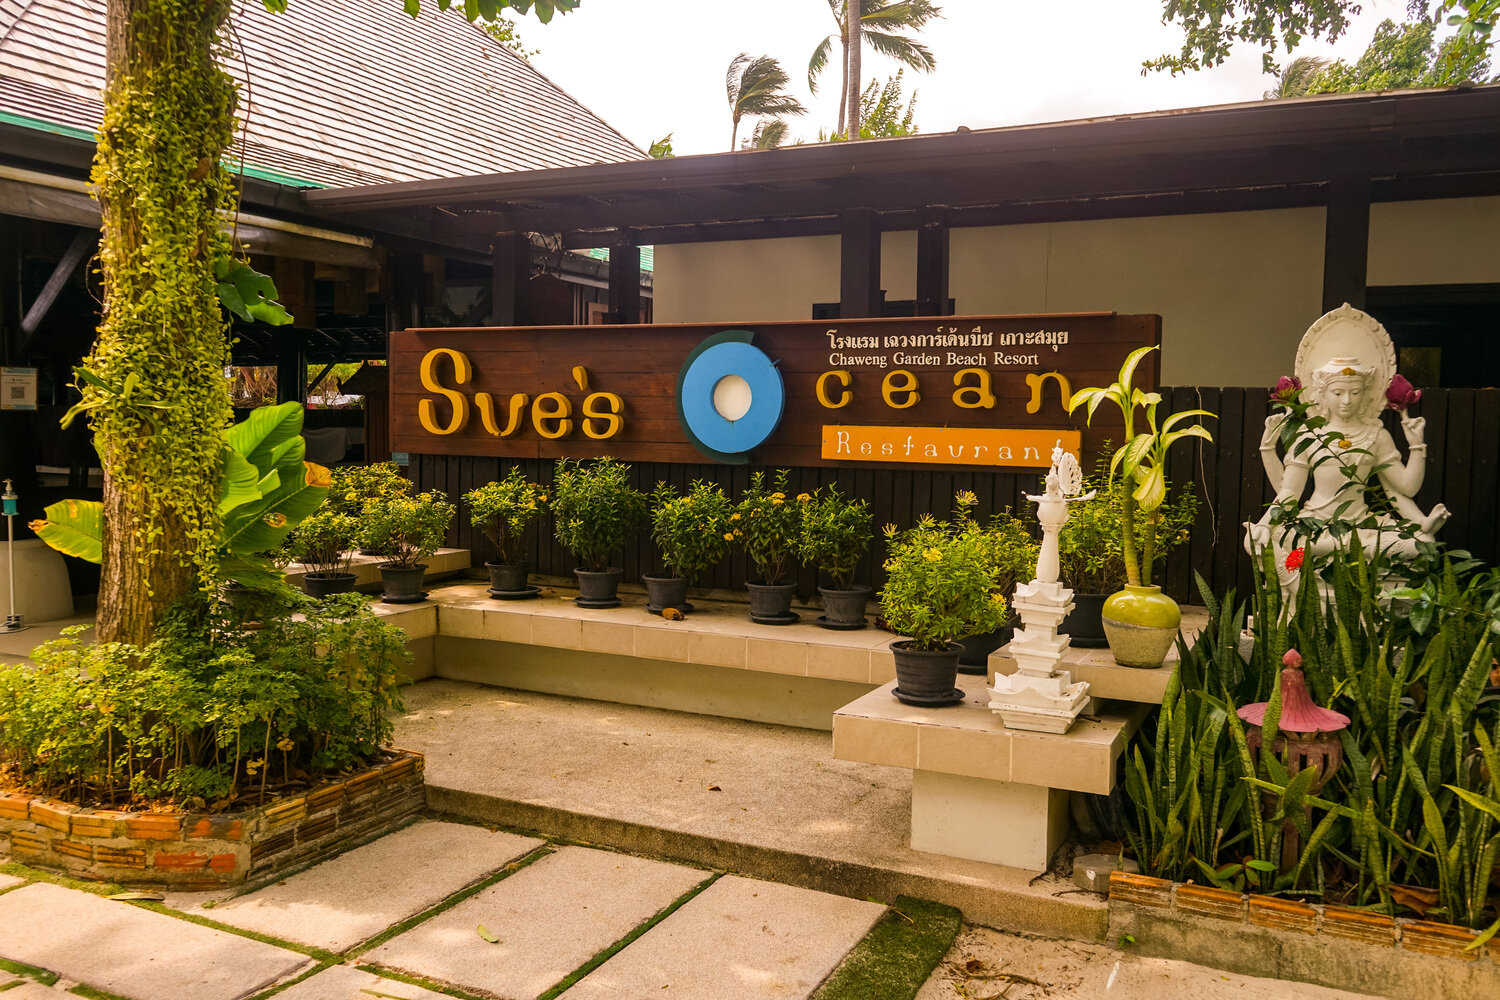 Sues-Ocean-Restaurant-Chaweng-Koh-Samui.jpg